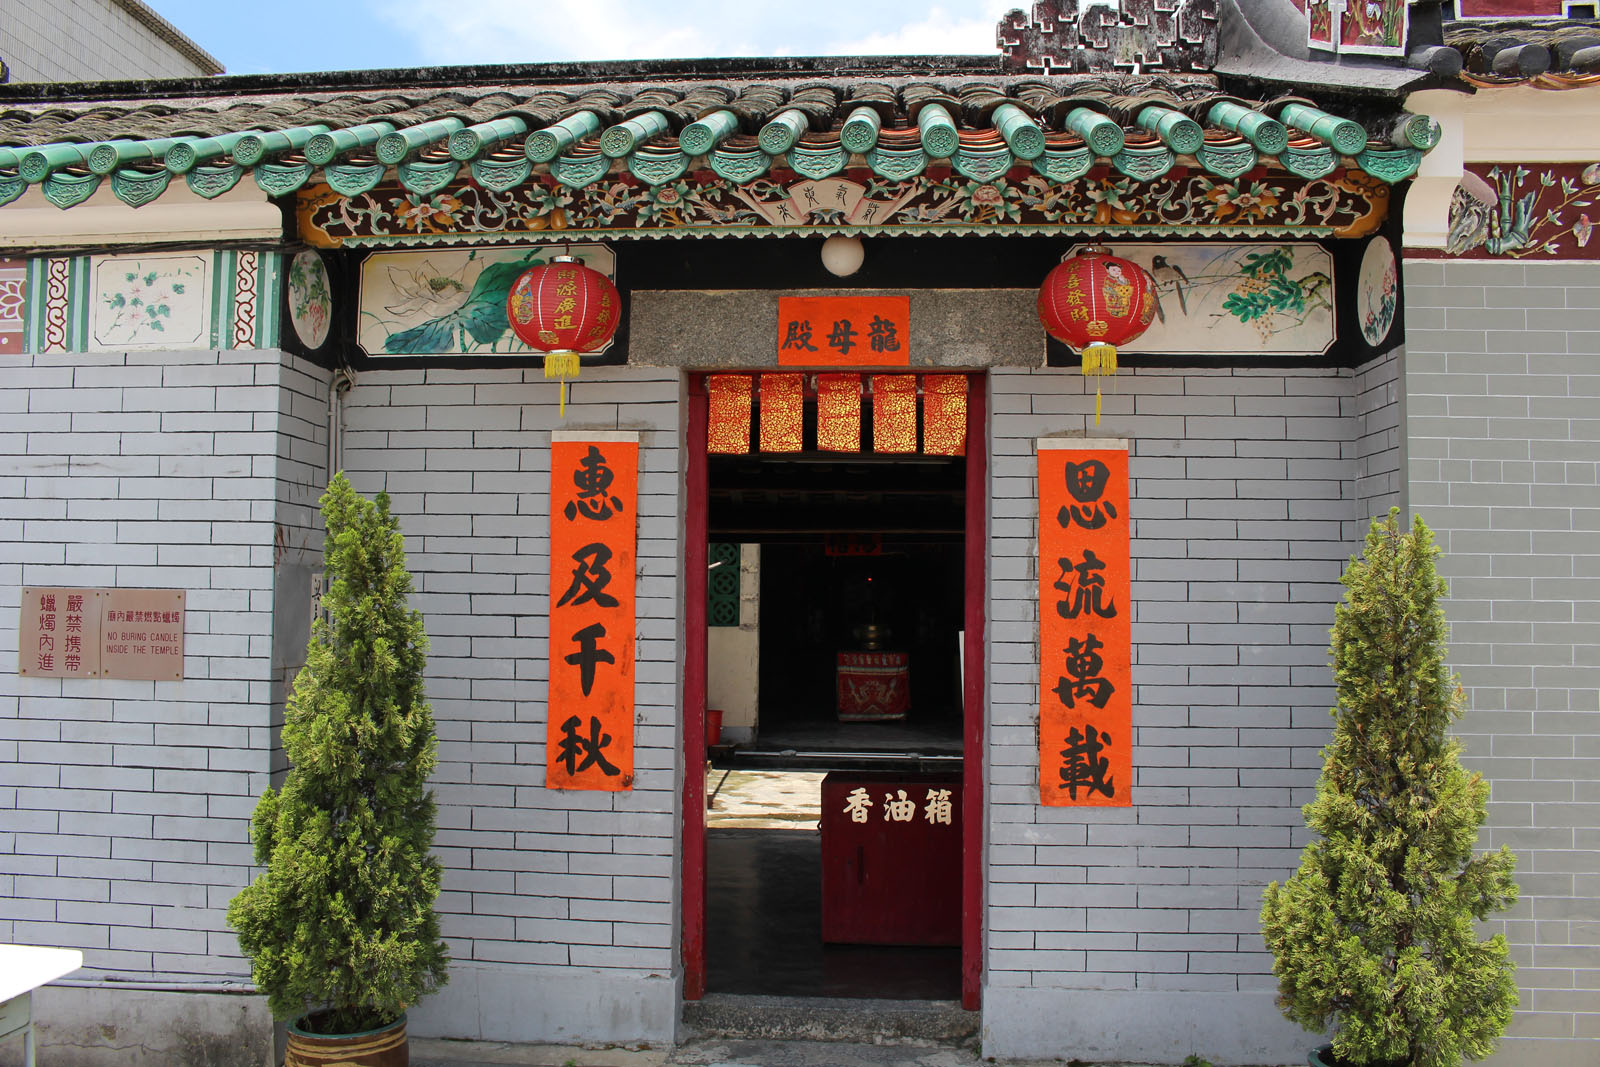 Photo 4: Lam Tsuen Tin Hau Temple